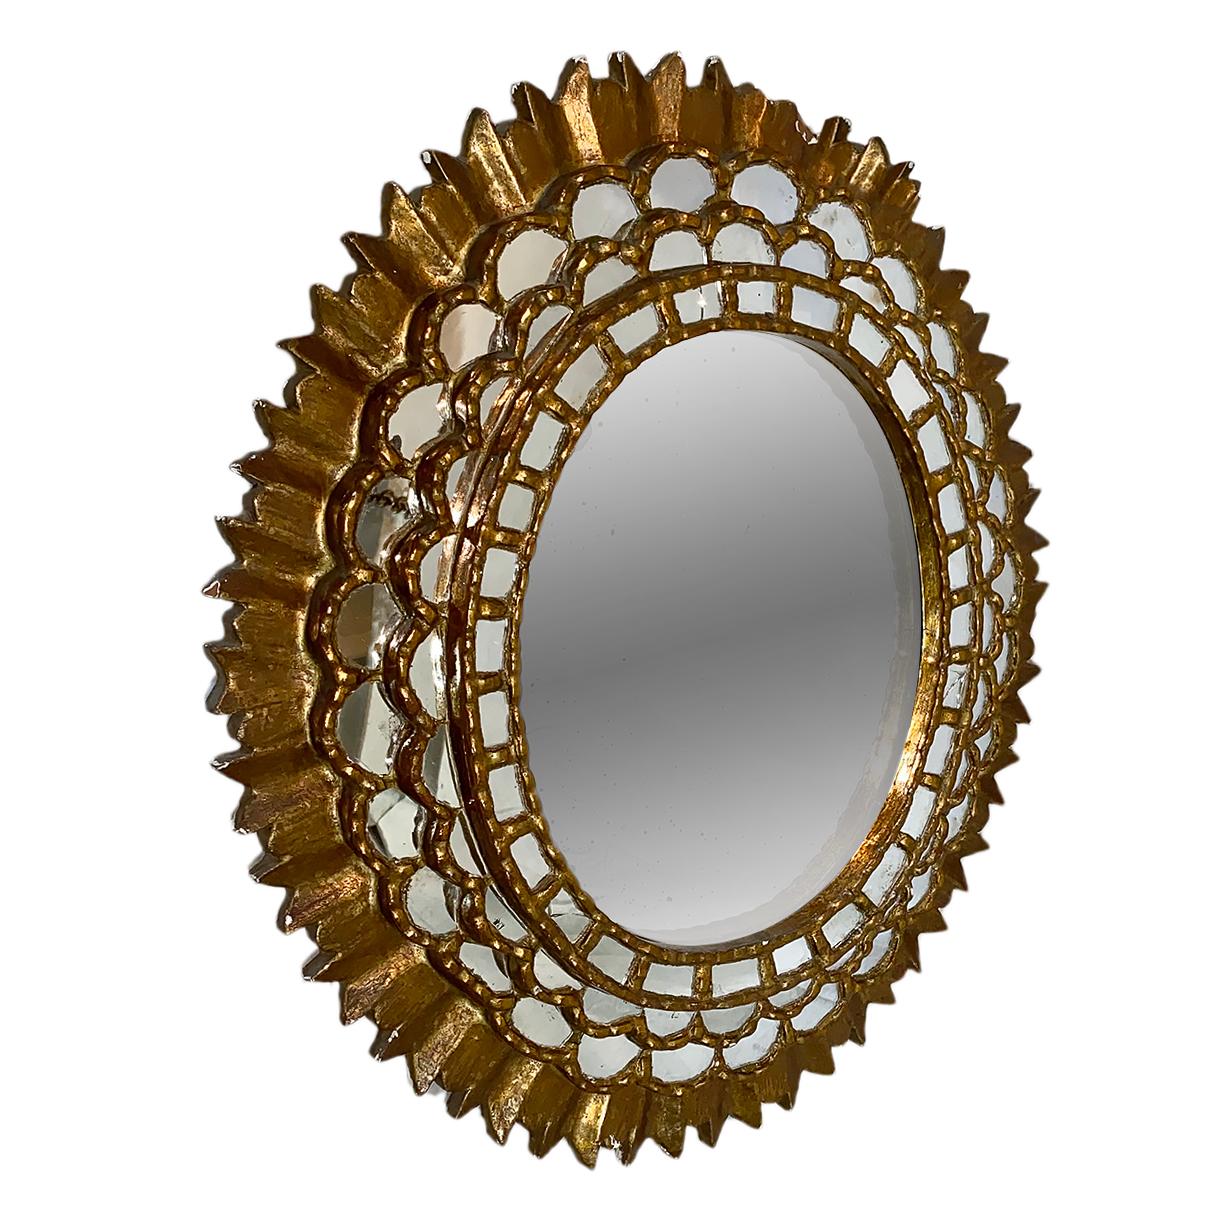 A circa 1920s Spanish giltwood sunburst mirror.

Measurements:
Height 40